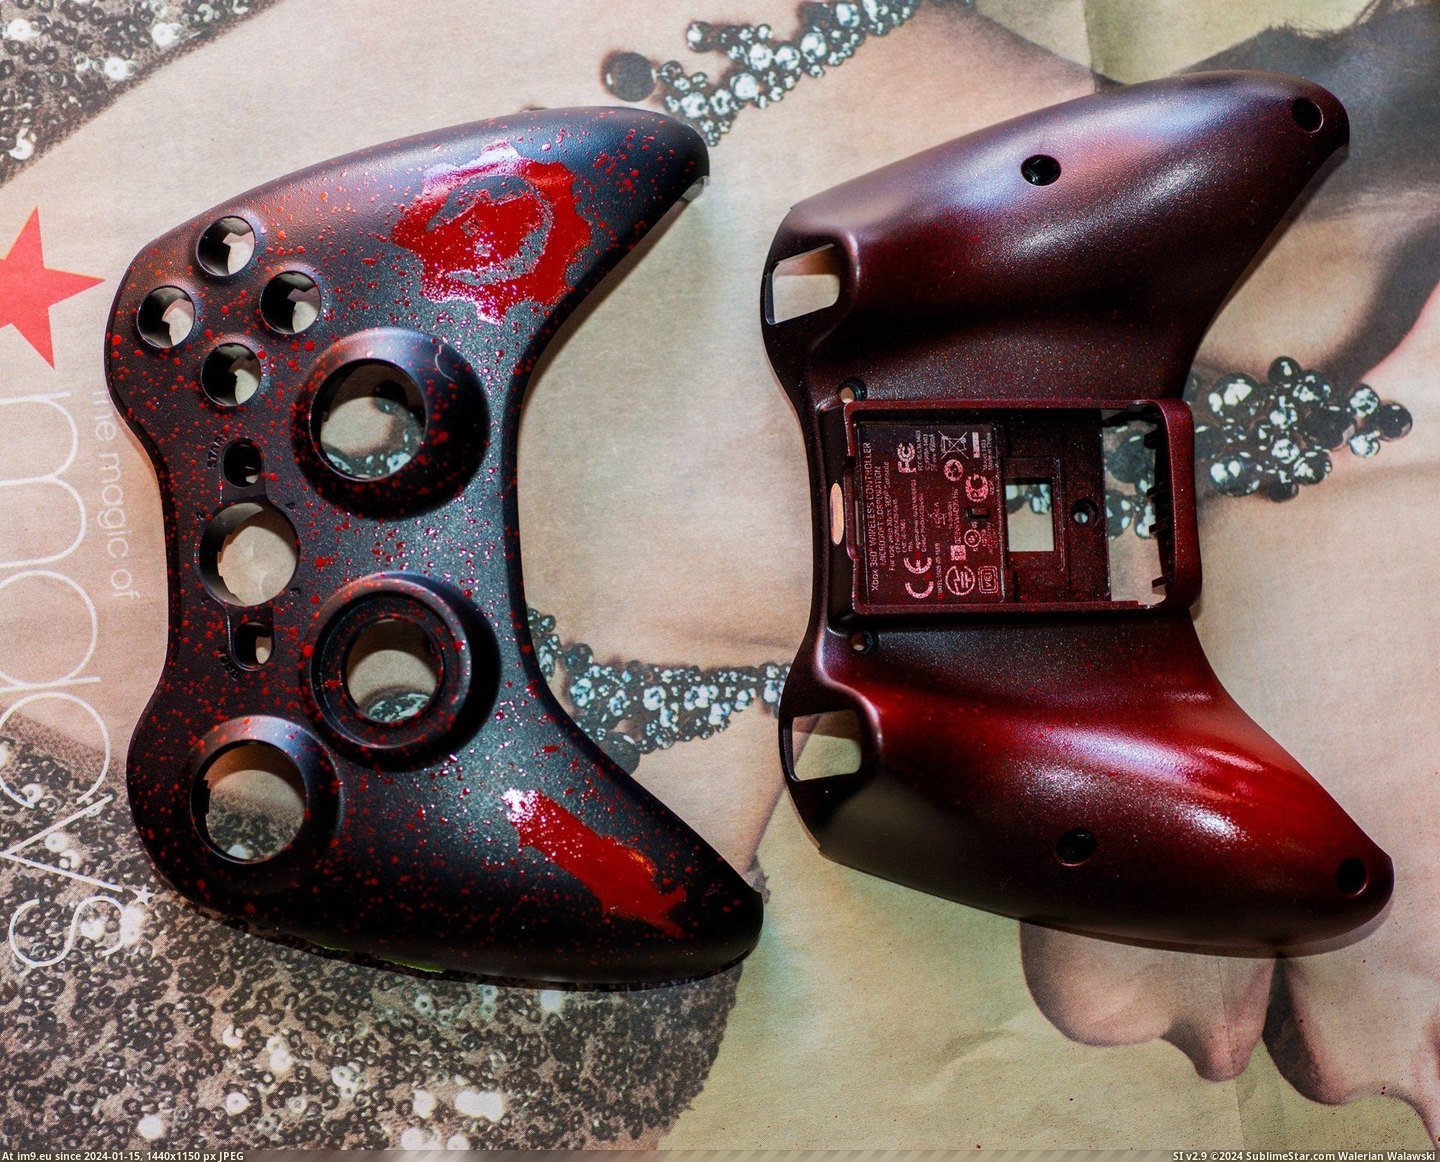 #Gaming #One #War #Controller #Redditor #Gears #Lucky #Painted #Xbox [Gaming] One lucky redditor is getting a custom painted Gears of War Xbox 360 controller! 3 Pic. (Изображение из альбом My r/GAMING favs))